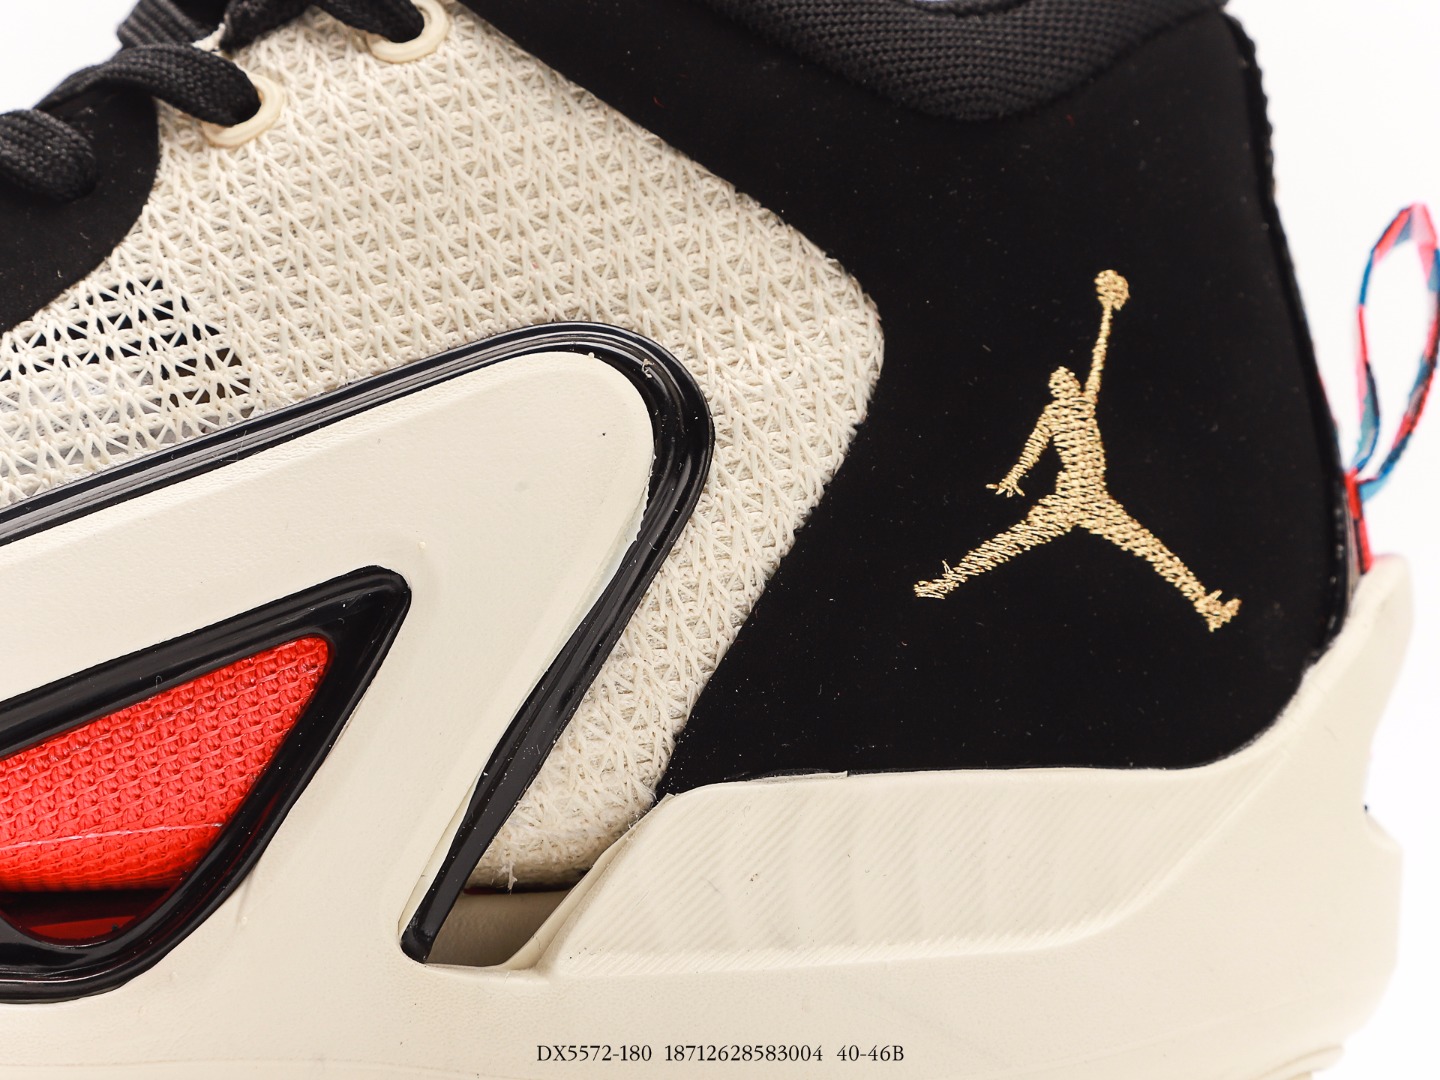 JT1 Jayson Tatum 1 PF “St. Louis” Anti slip Practical Oem Quality  Basketball Shoes For Men